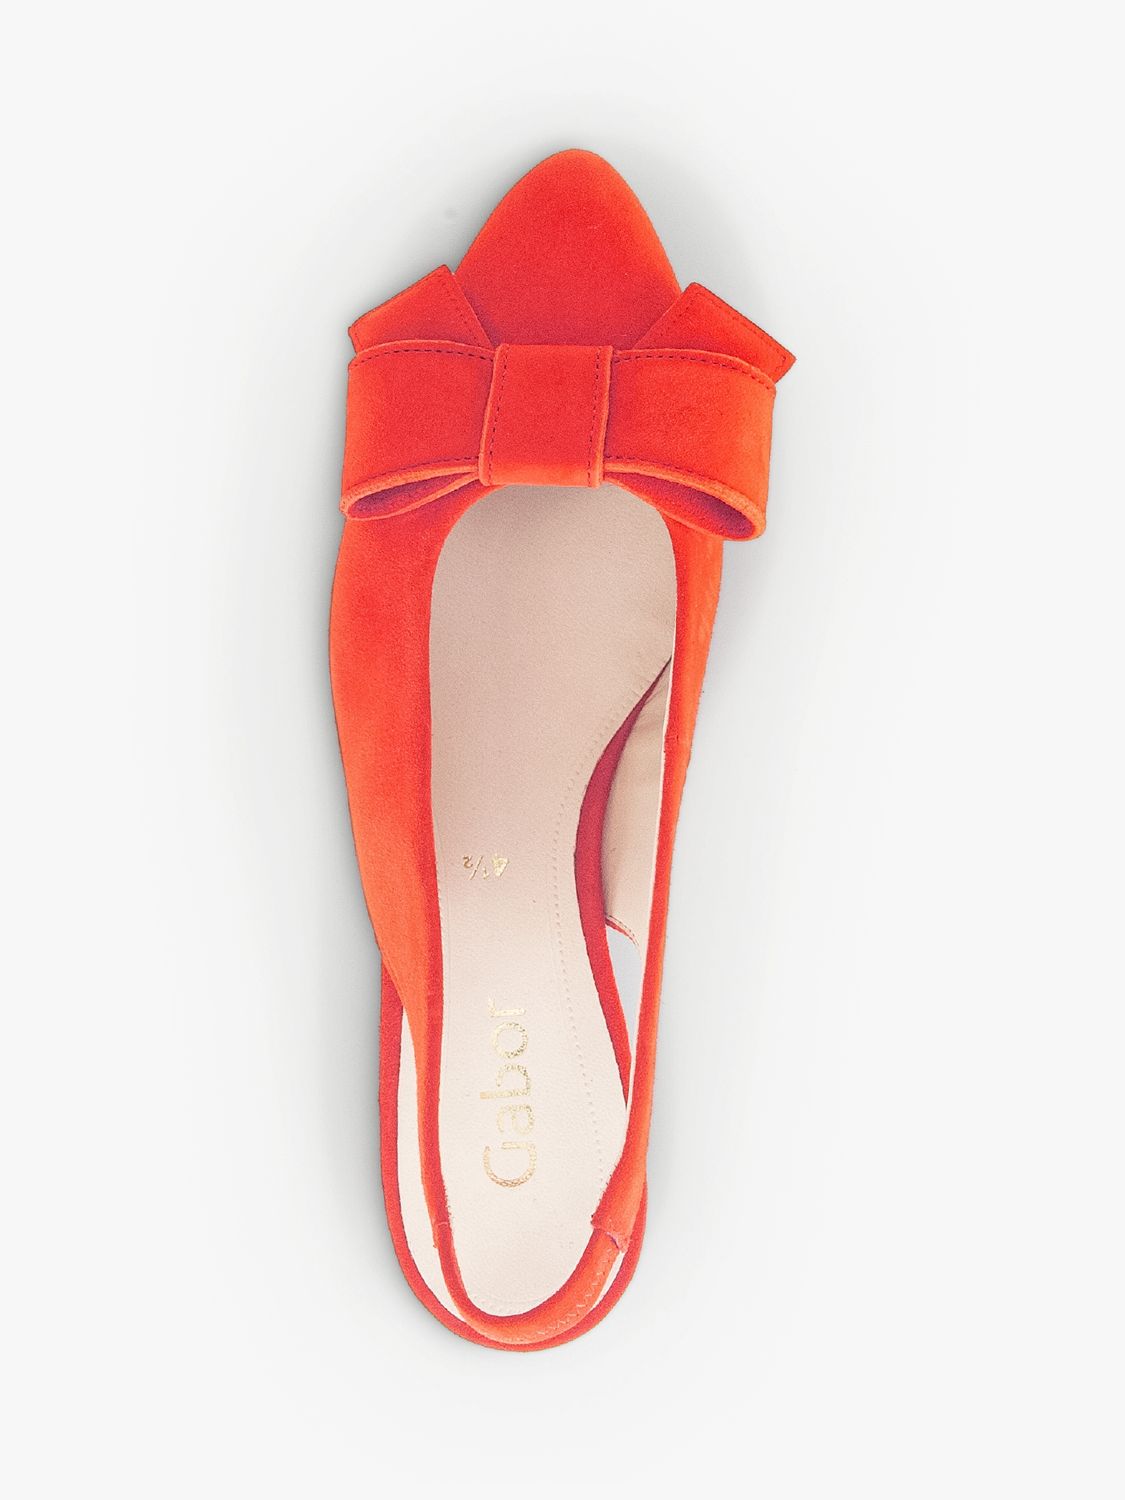 Gabor Monte Carlo Suede Large Bow Detail Slingback Shoes, Pumpkin, 8